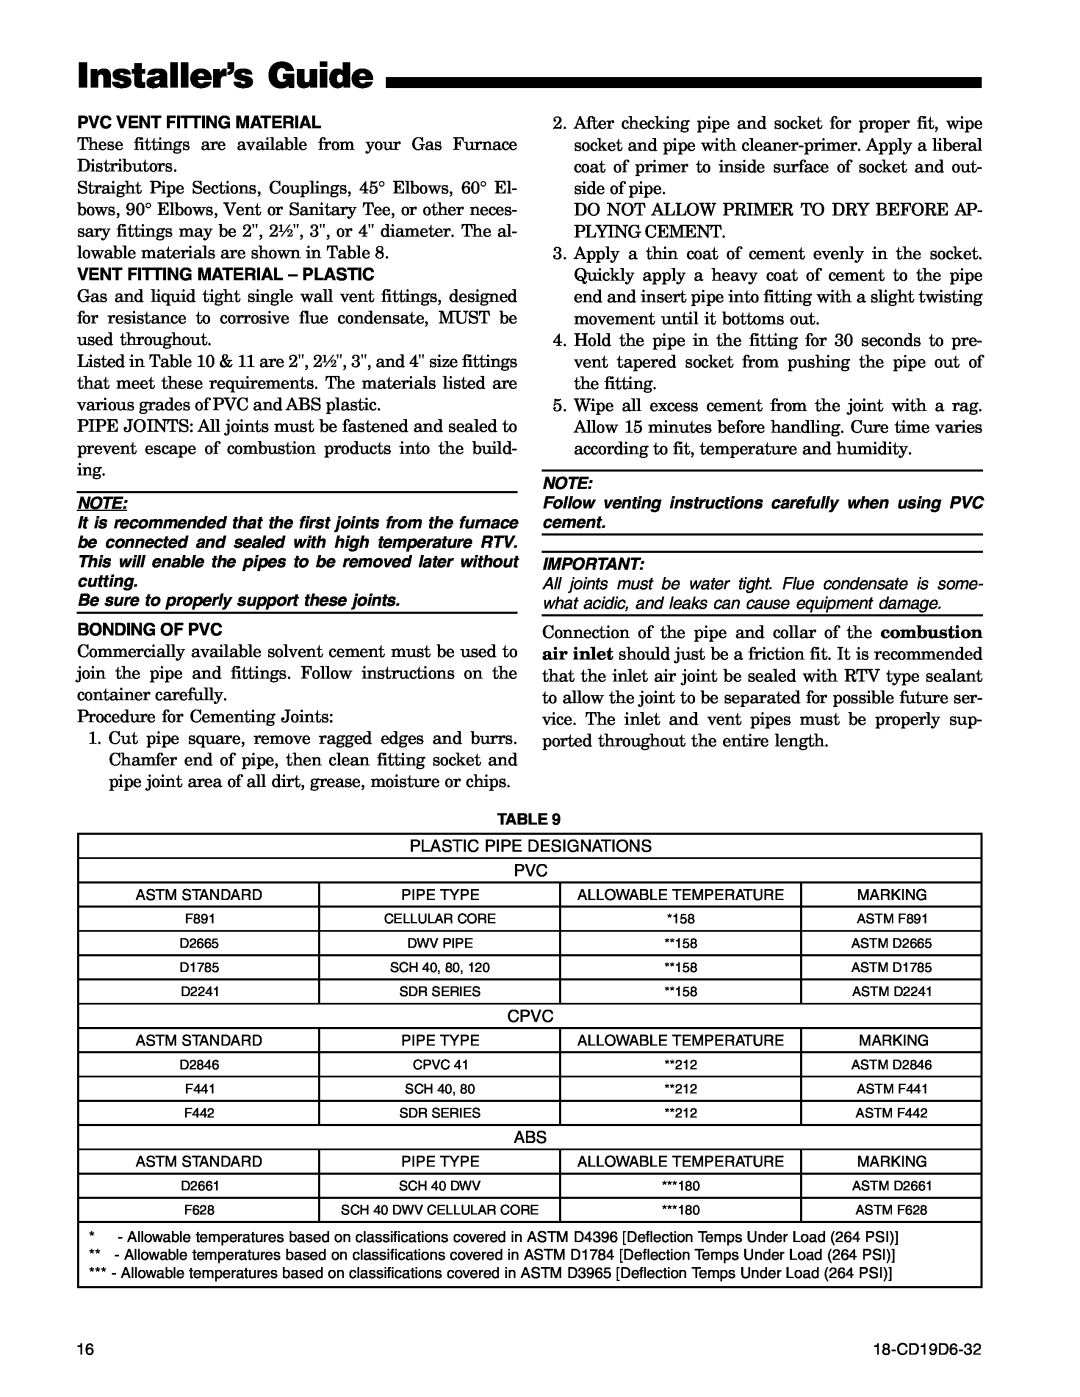 Trane UX1C080A9601A manual Installer’s Guide, Pvc Vent Fitting Material, Vent Fitting Material - Plastic, Bonding Of Pvc 